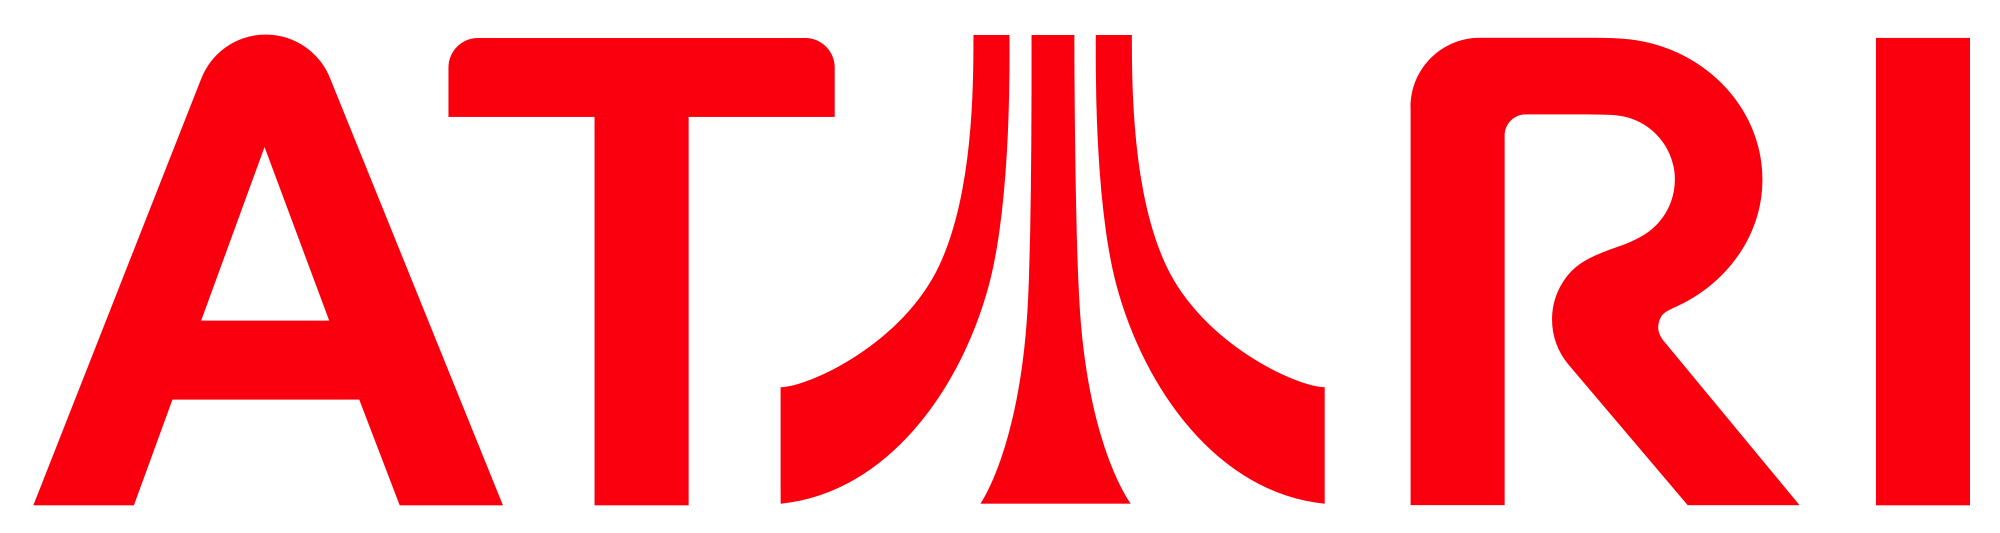 The Atari logo as displayed o